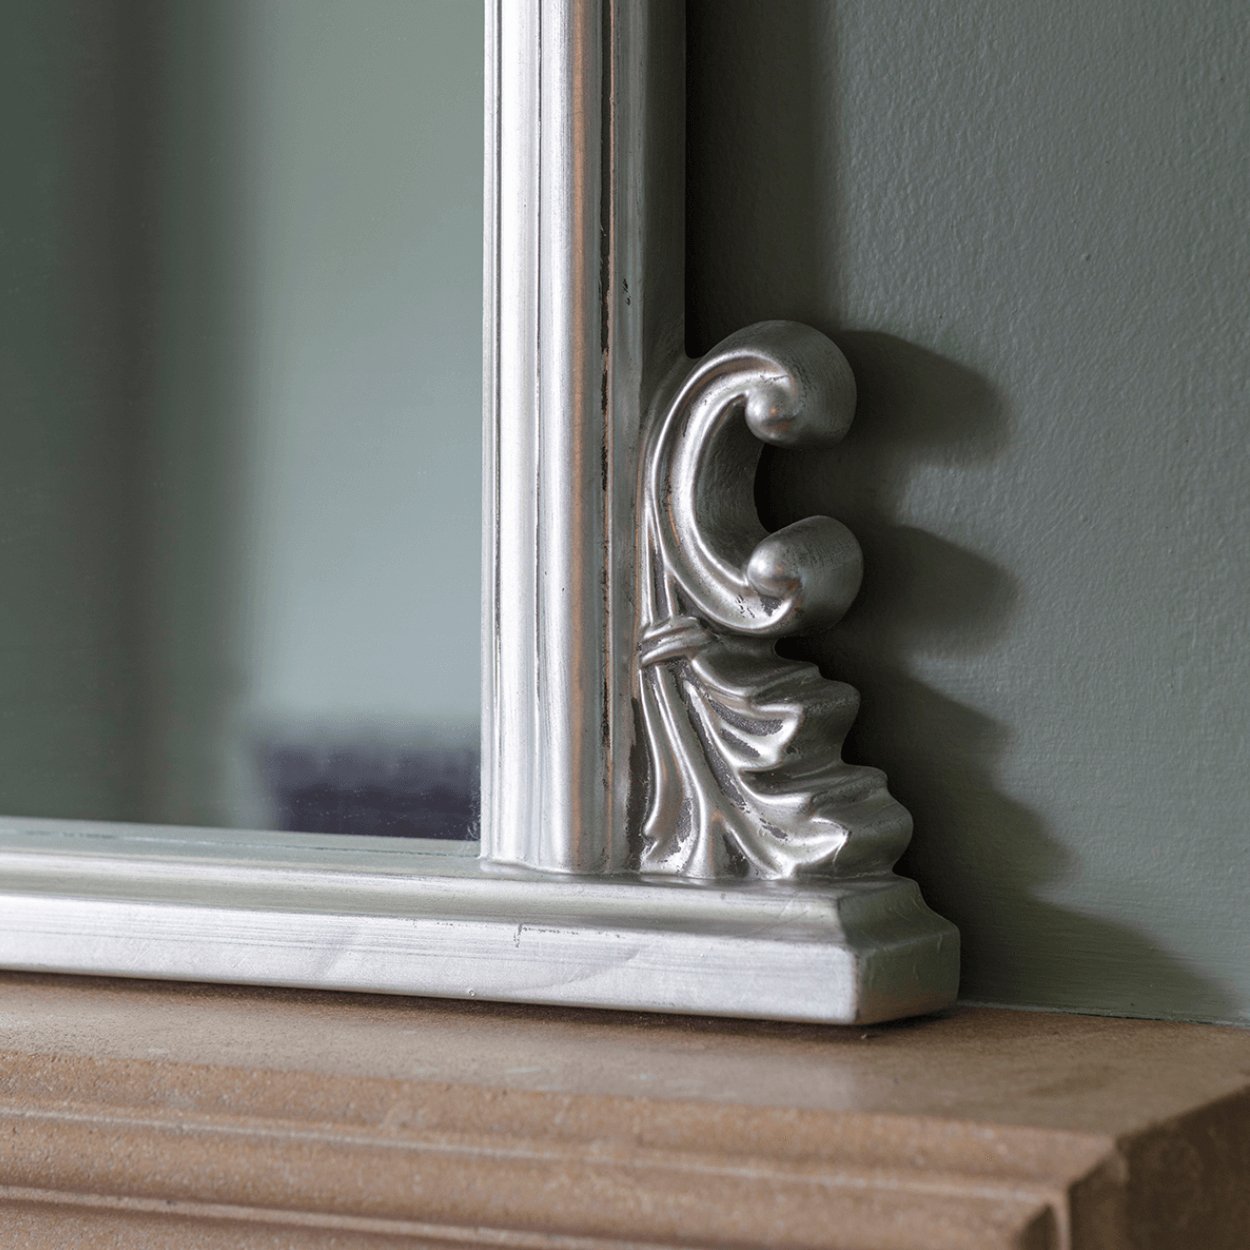 thornby silver mirror close up of decorative corner